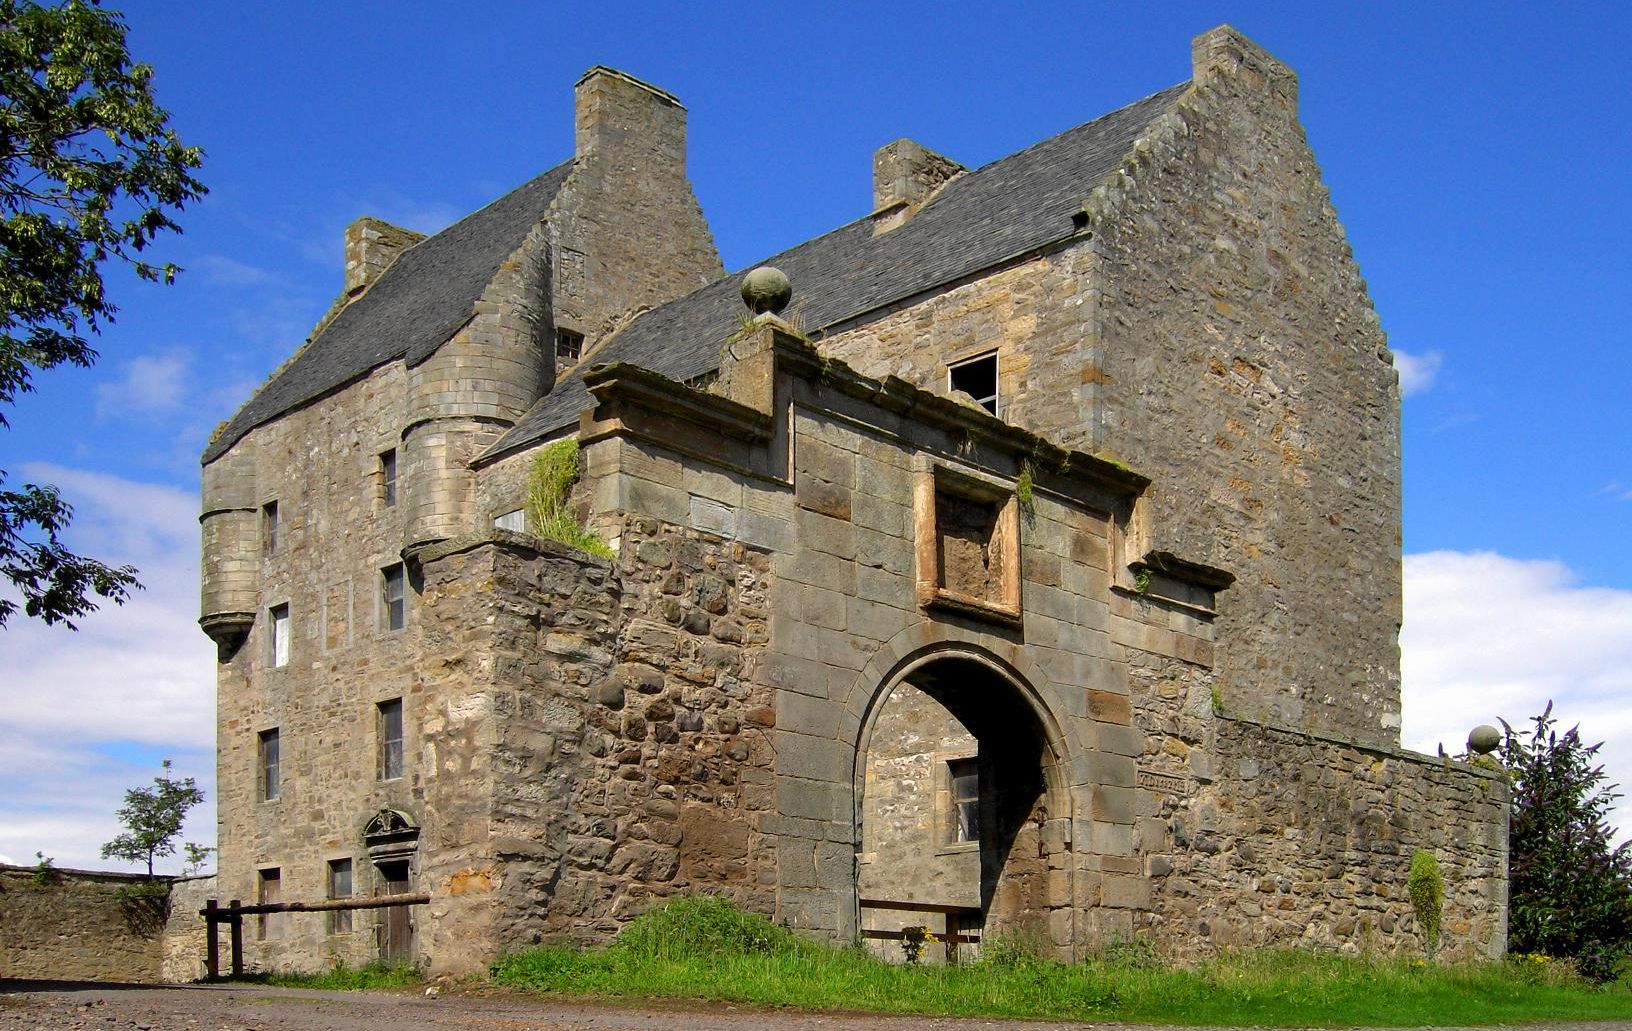 Midhope Castle at Abercorn